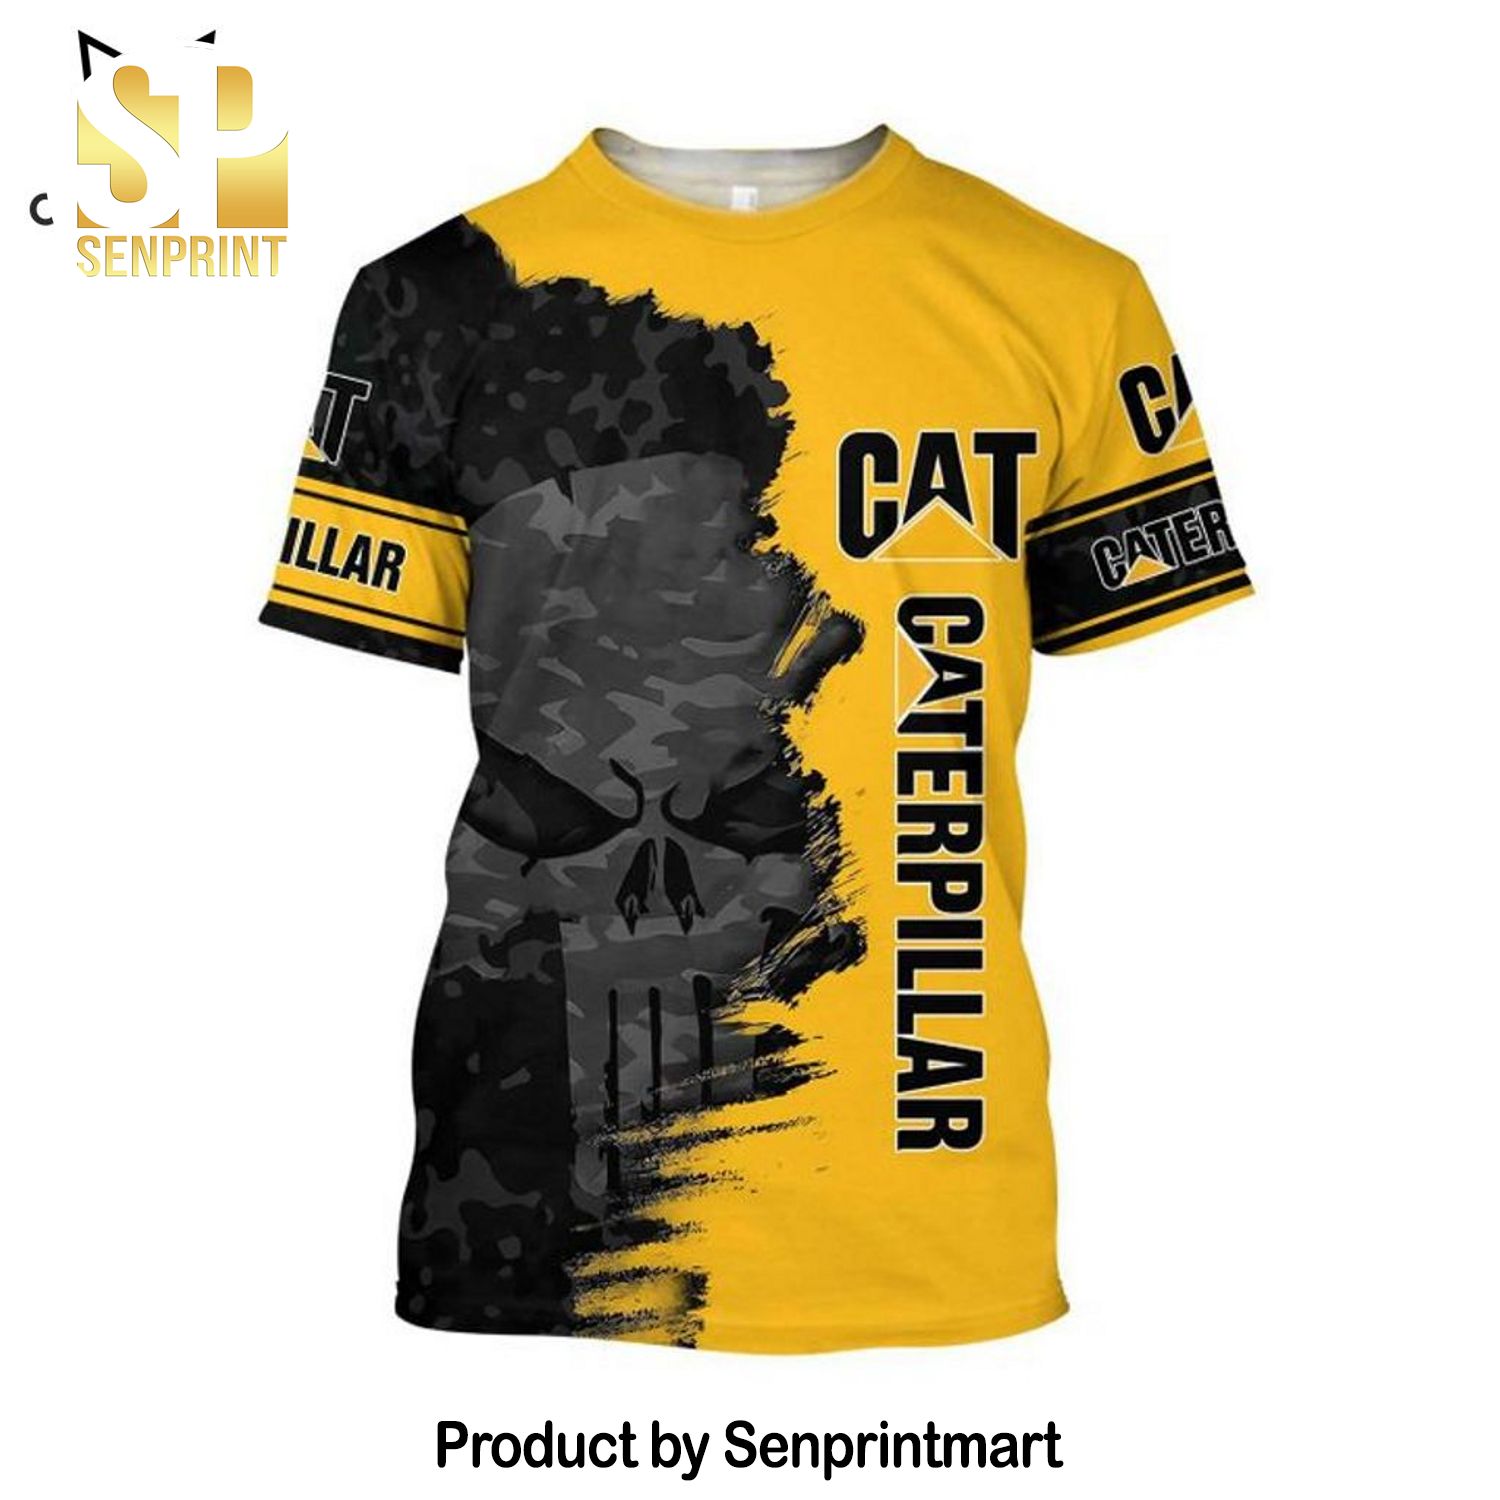 Caterphillar Black Yellow Design Full Printed Shirt